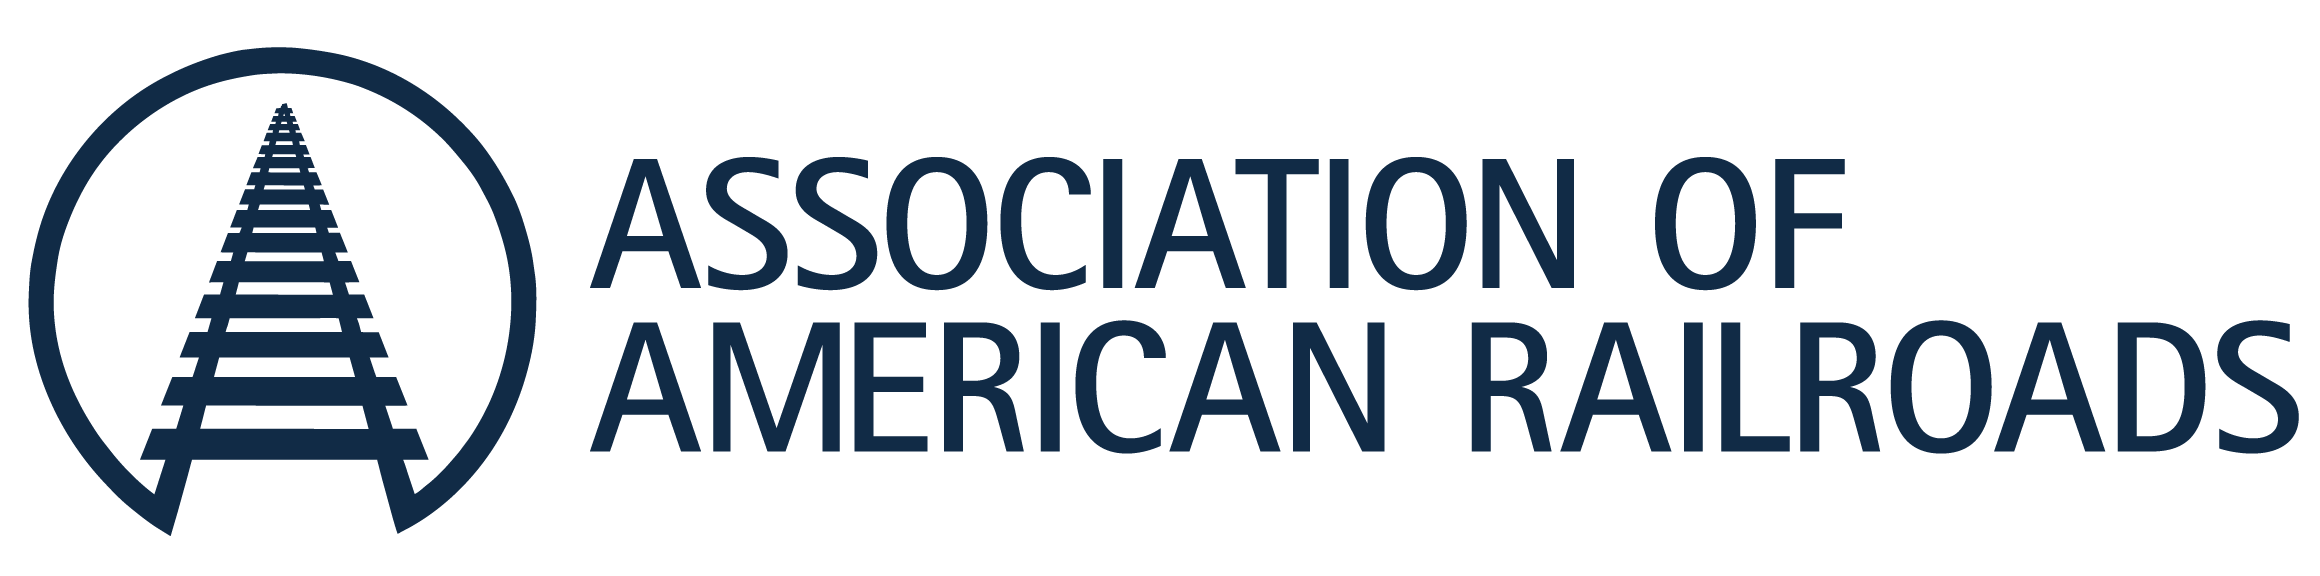 Association of American Railroads logo